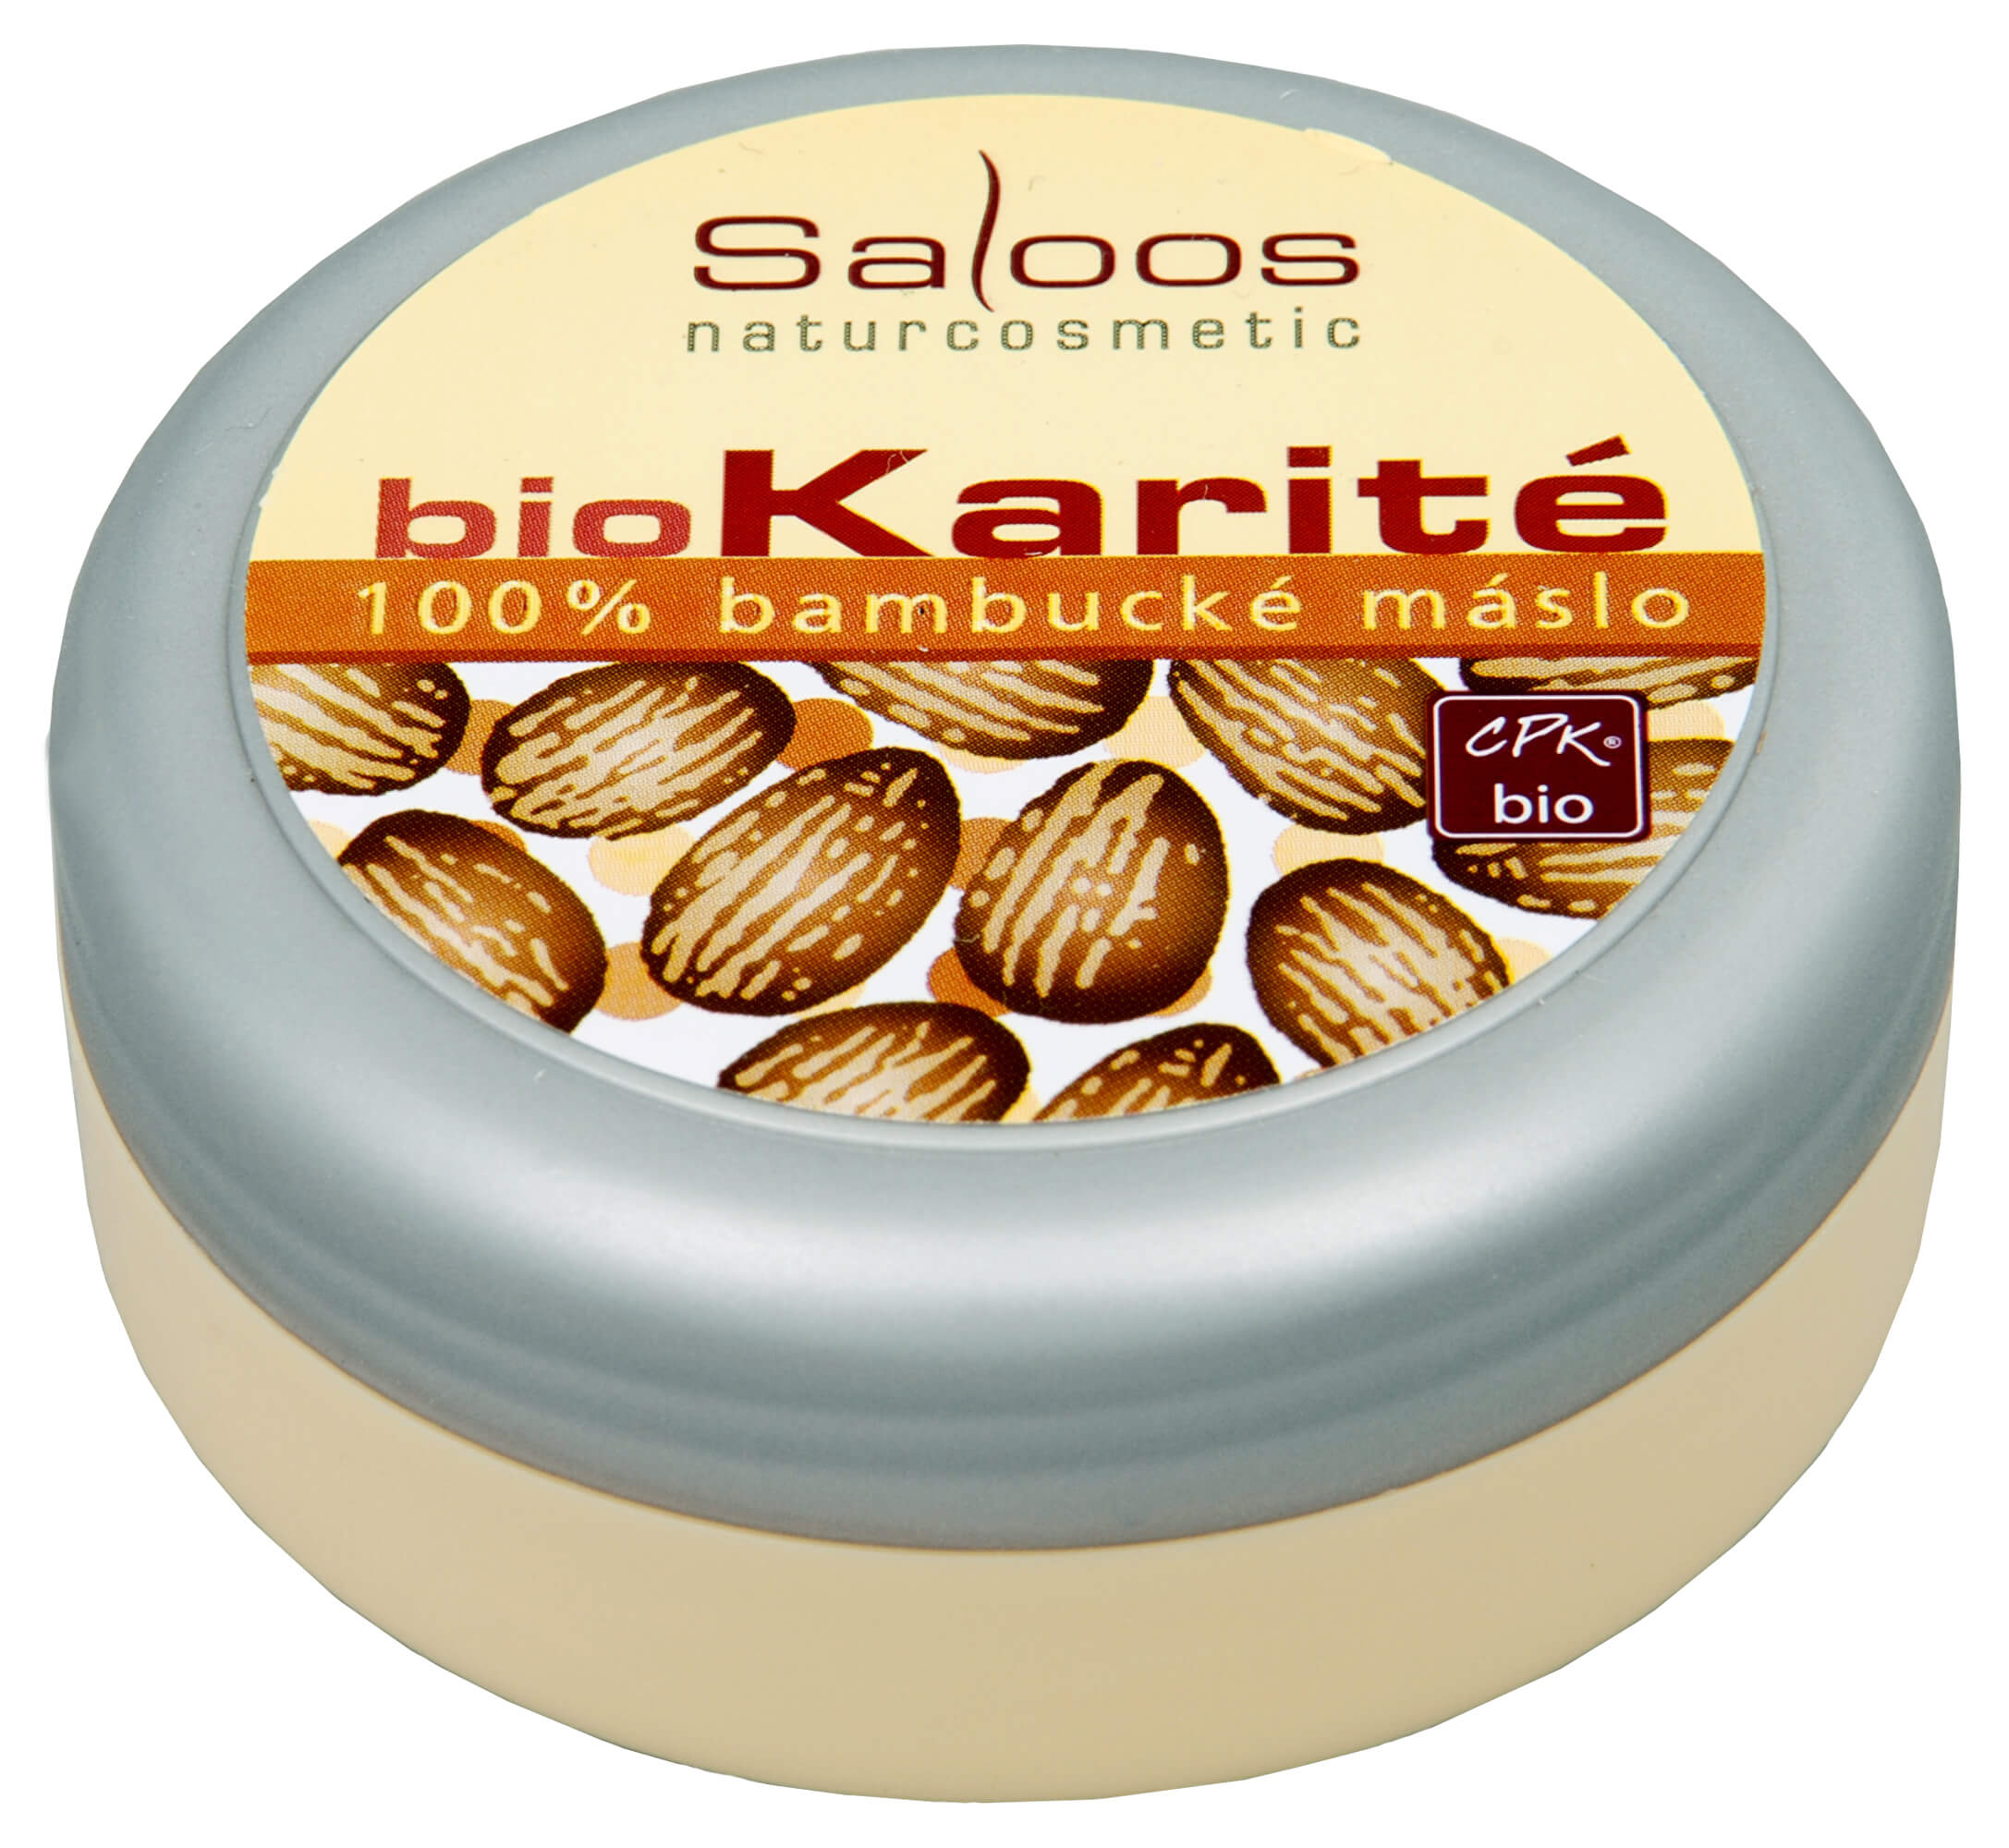 Zobrazit detail výrobku Saloos Bio Karité balzám - 100% bambucké máslo 250 ml